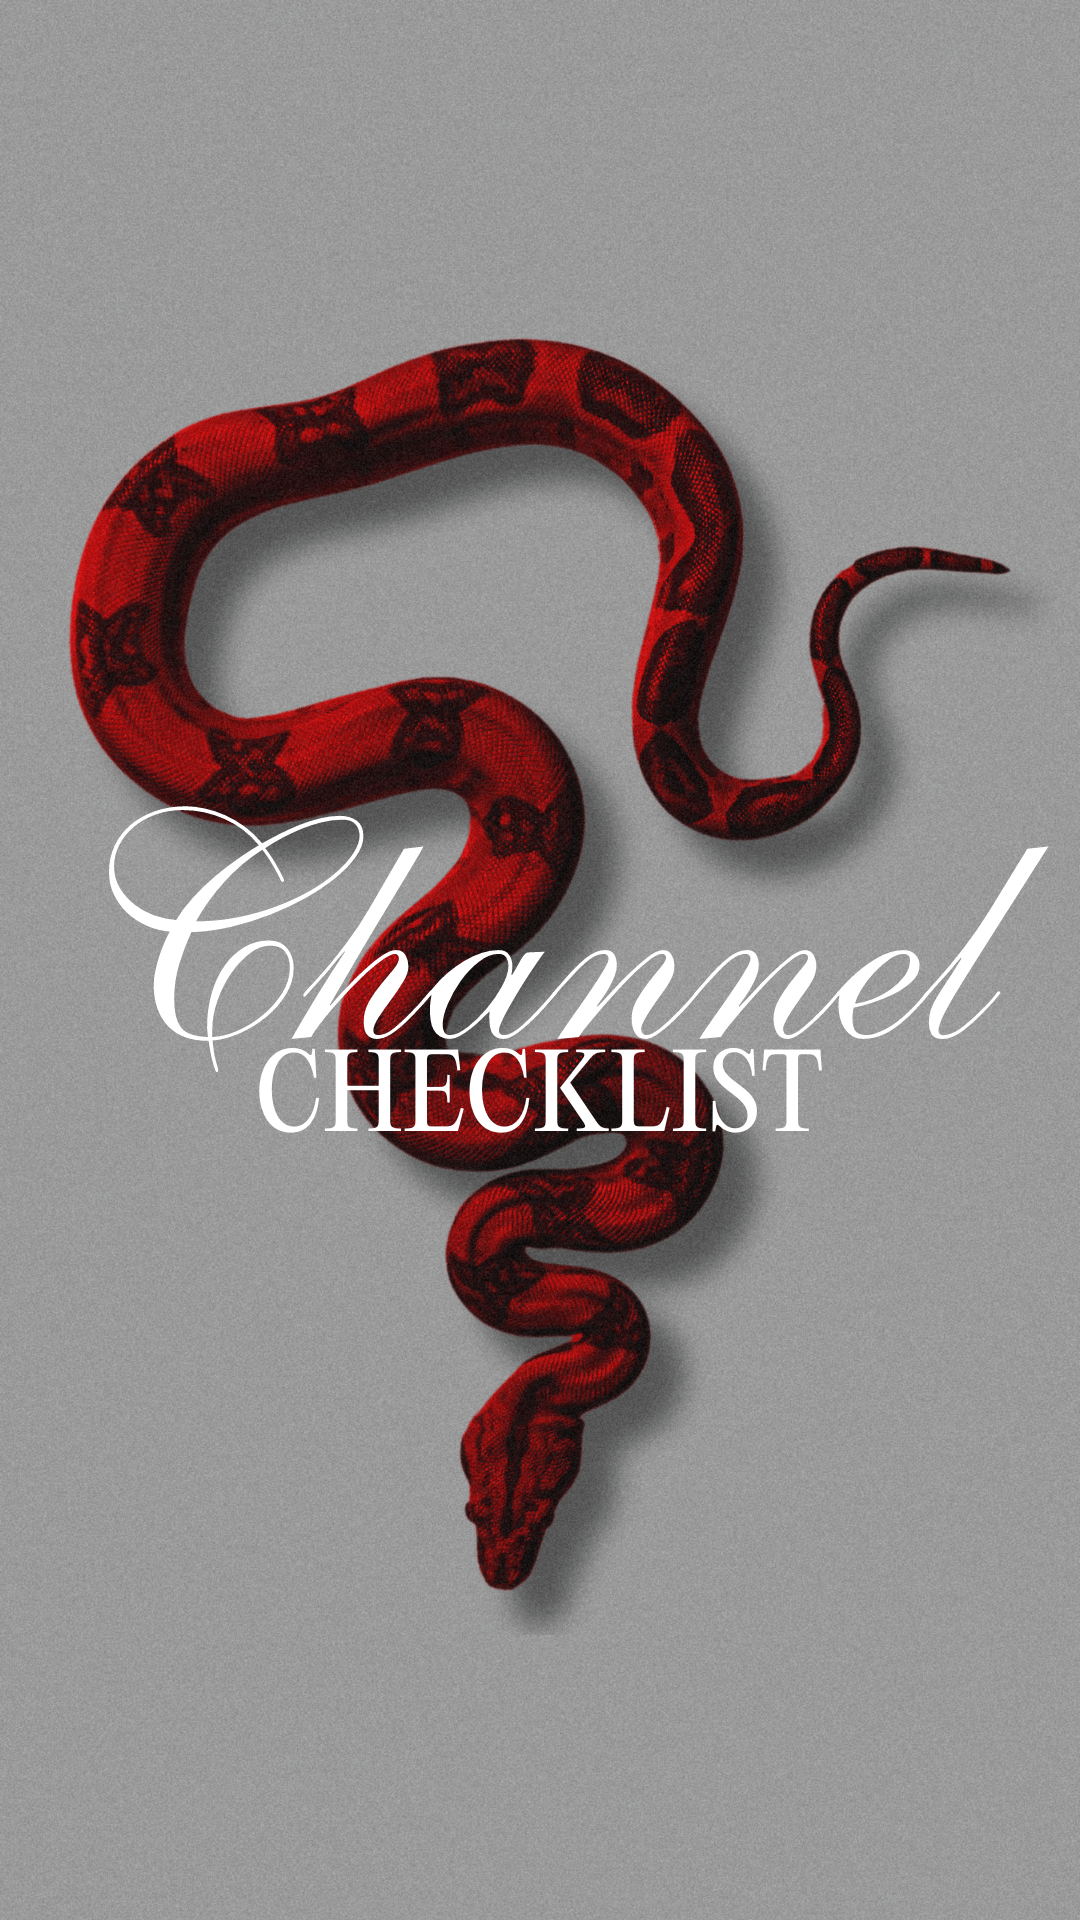 IYNX Music Marketing Channel Checklist 3